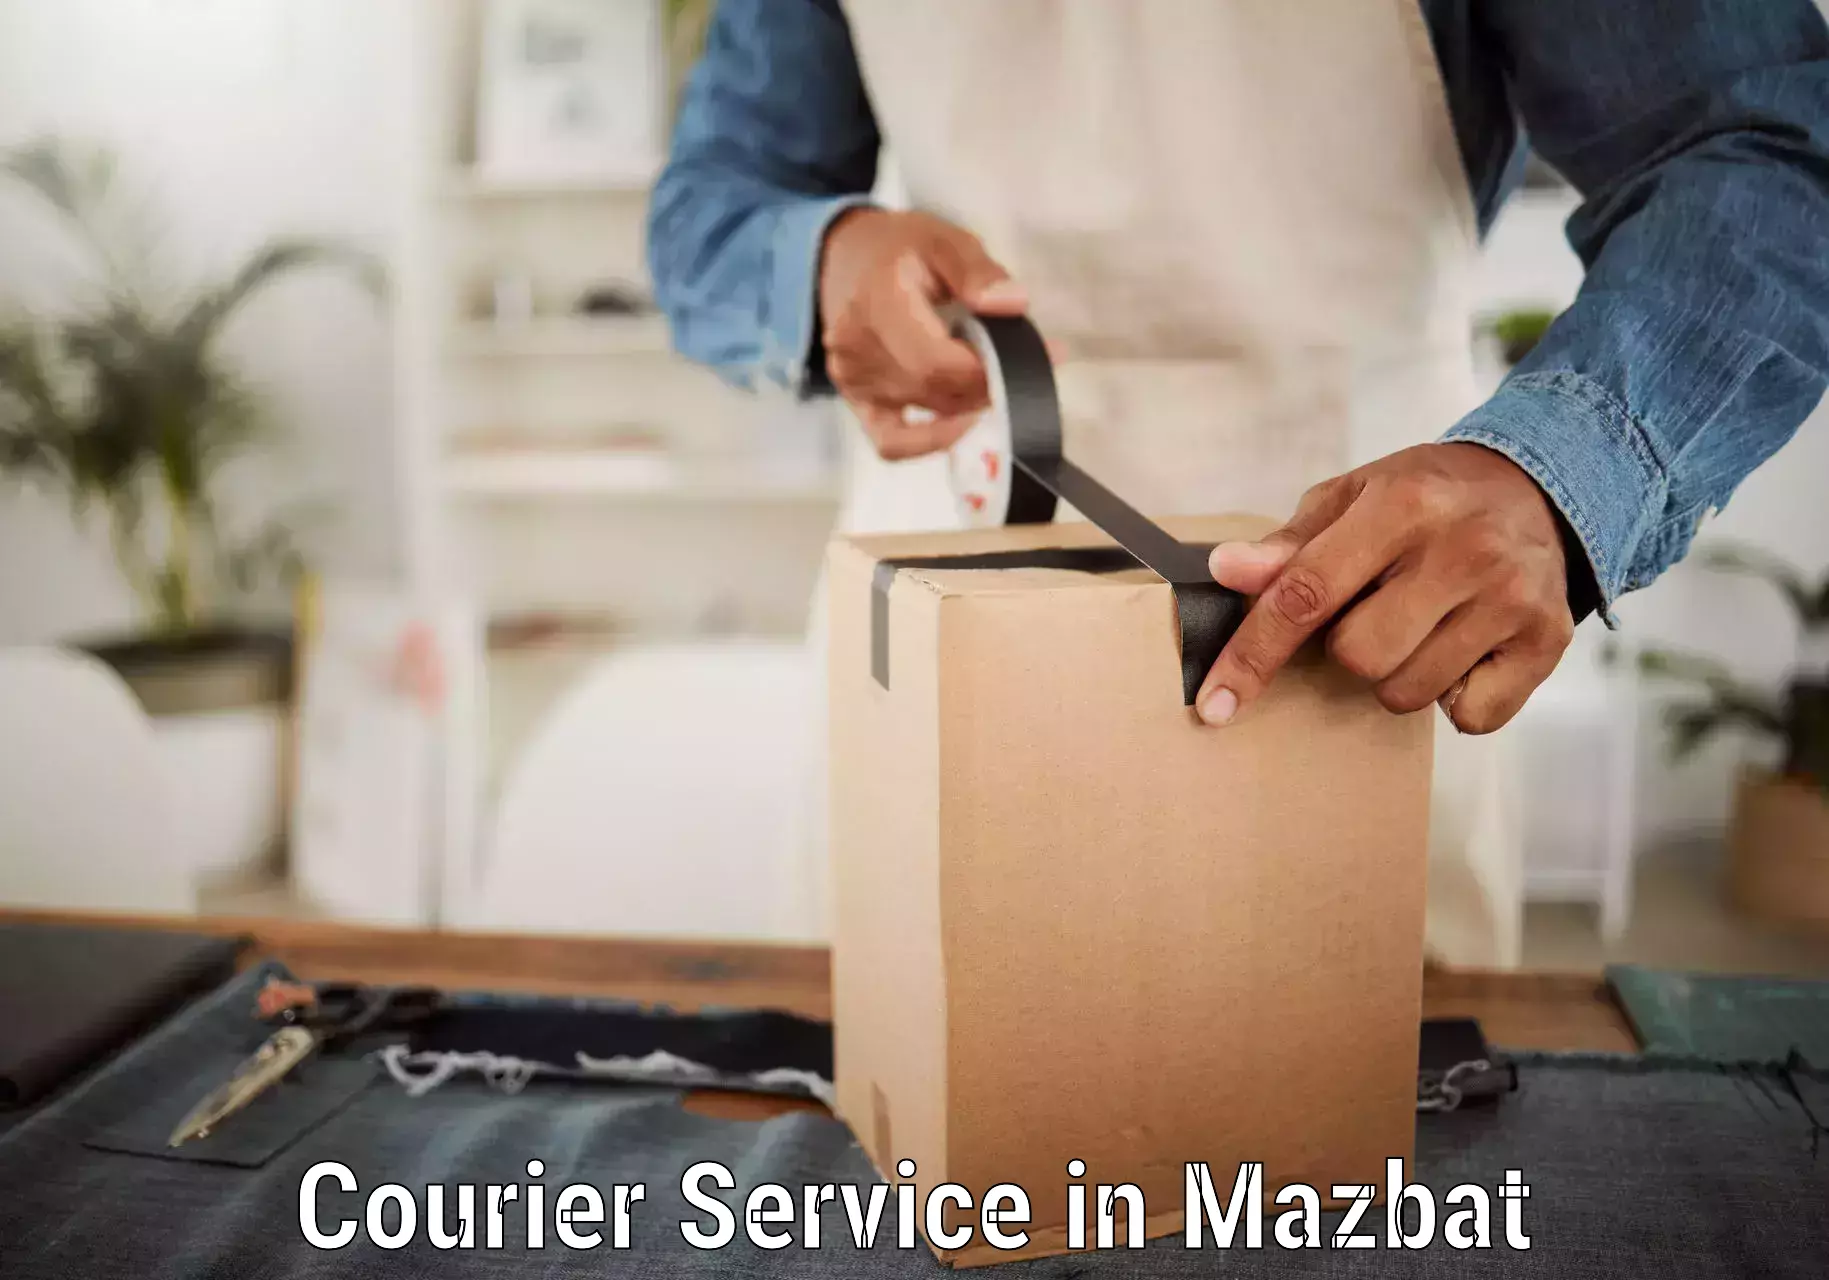 High-capacity parcel service in Mazbat